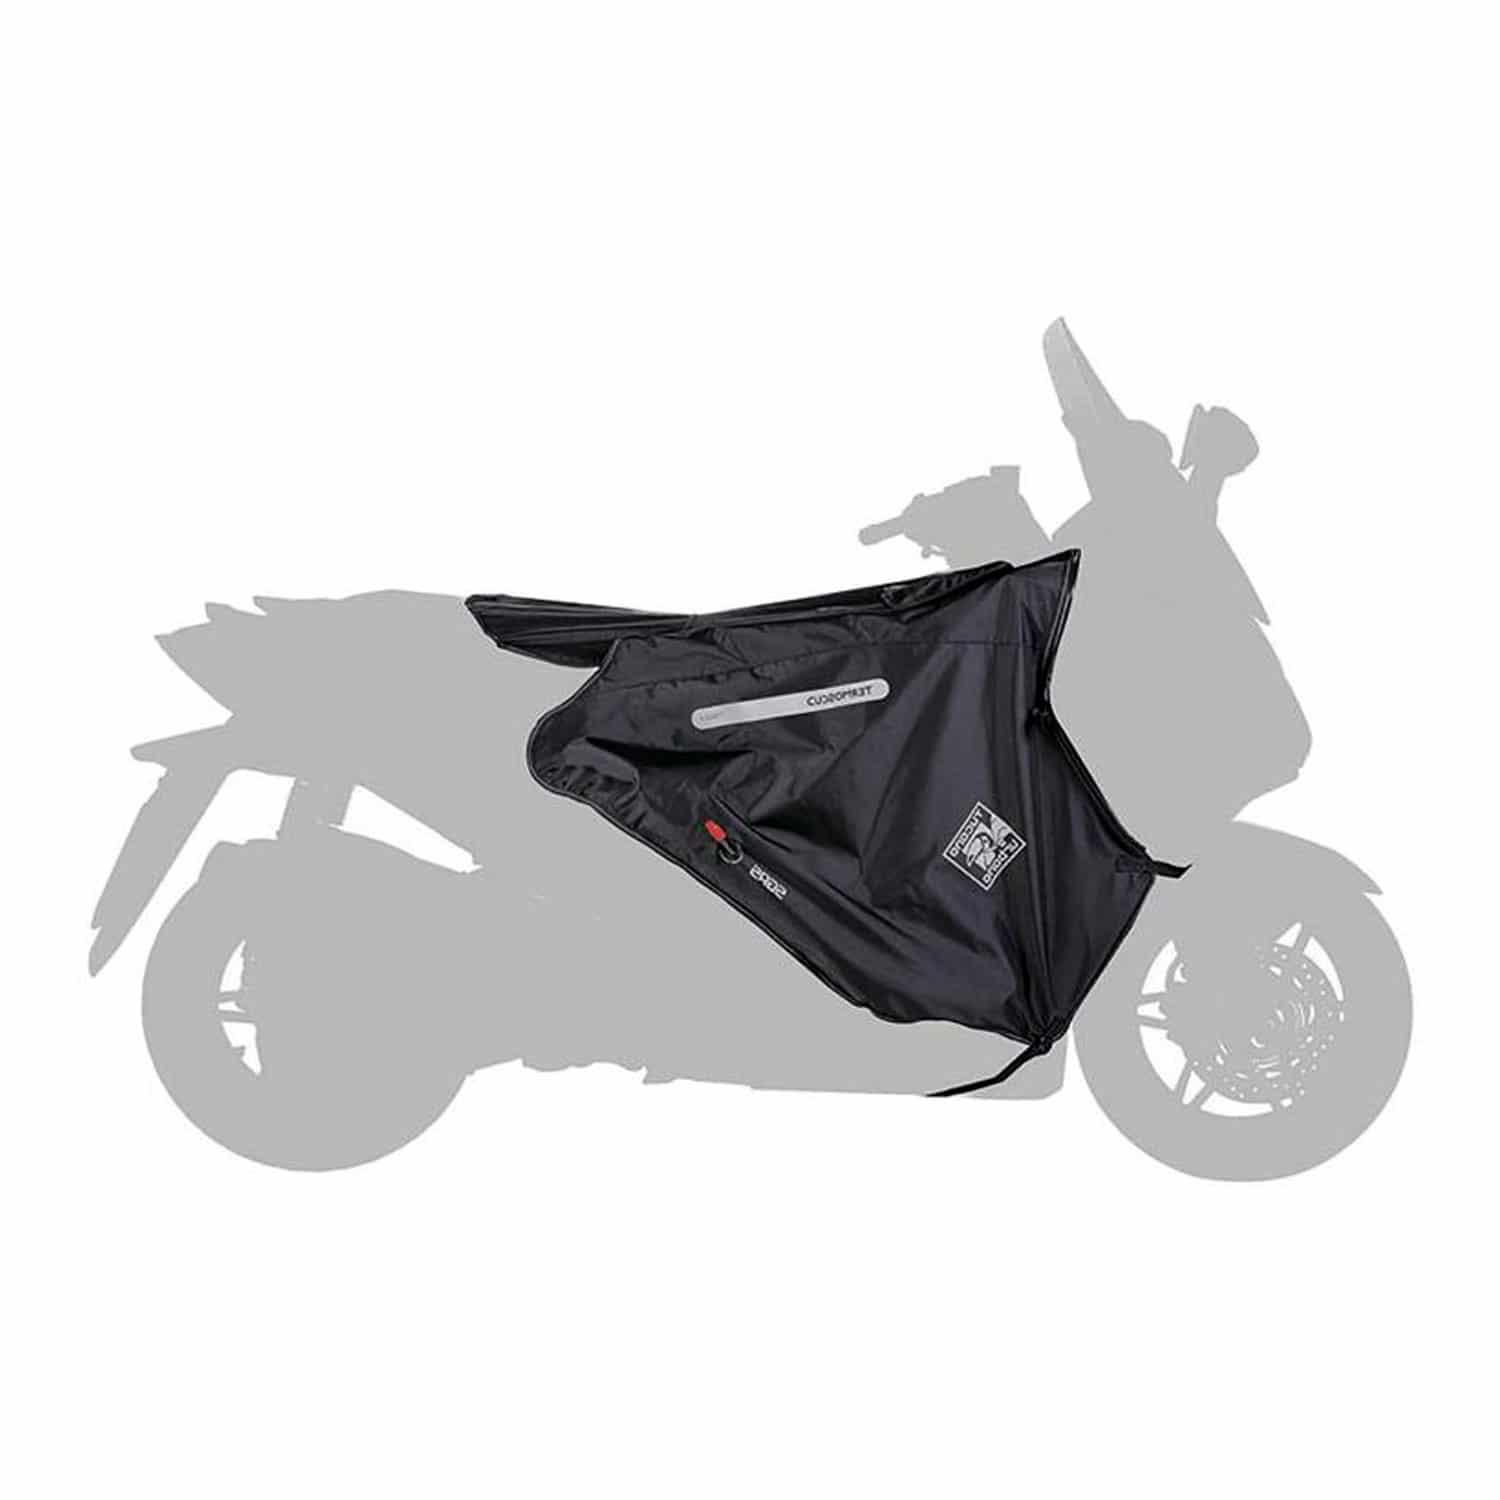 Manchons scooter marque Tucano - Équipement moto